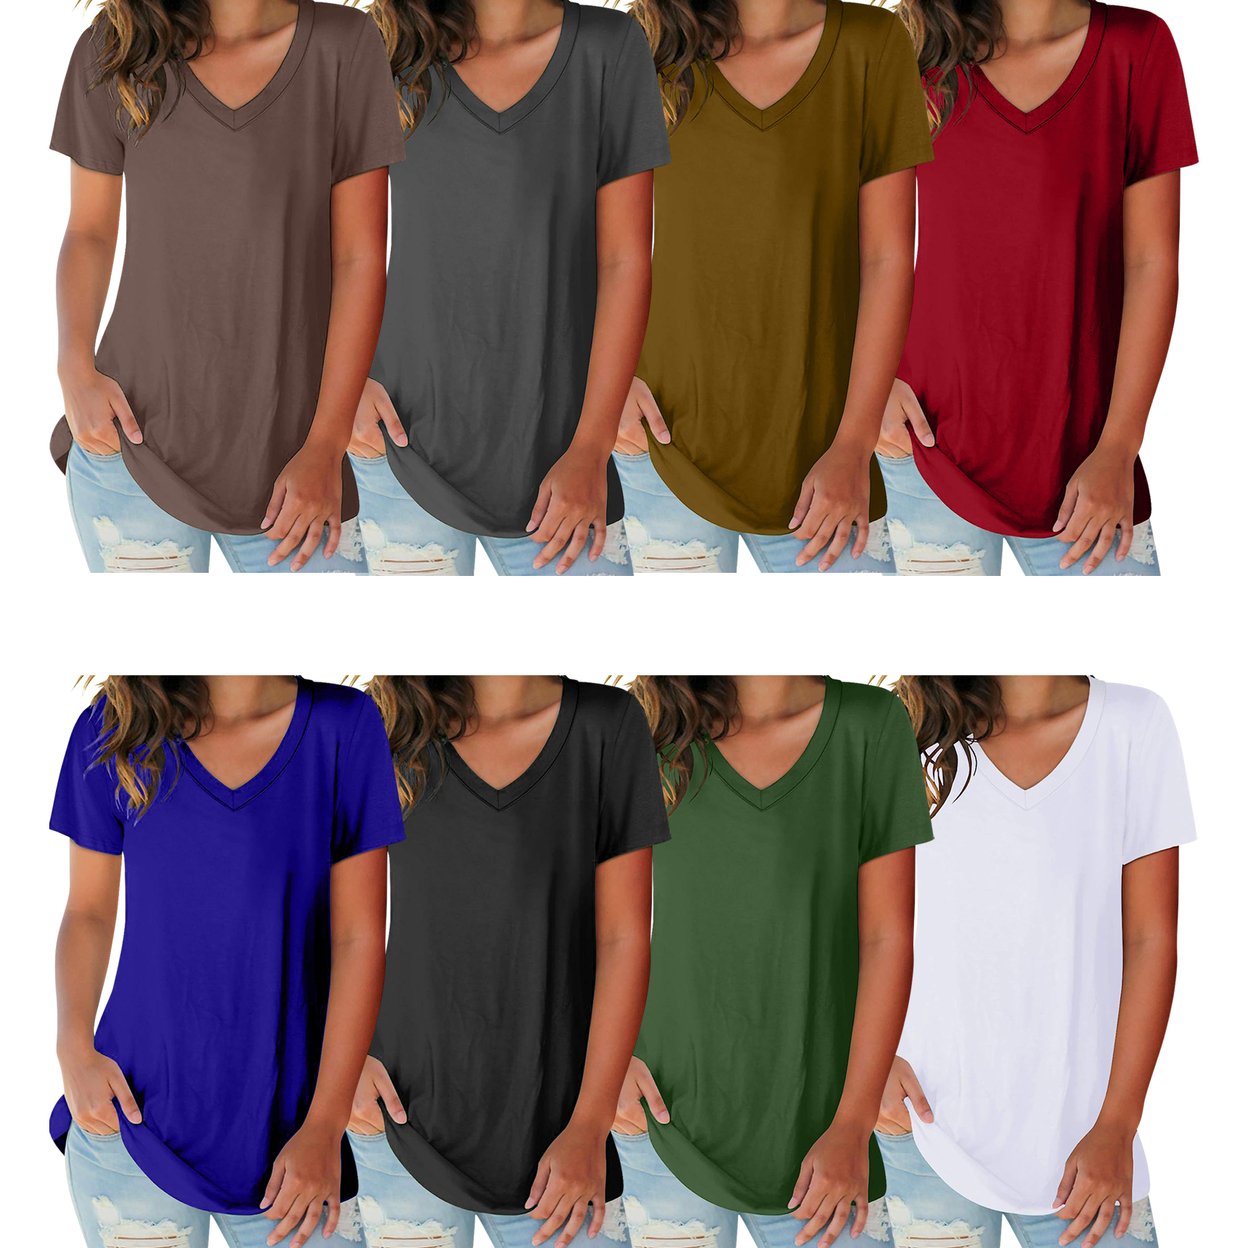 3-Pack: Women's Ultra Soft Smooth Cotton Blend Basic V-Neck Short Sleeve Shirts - Black, Grey, Brown, Xx-large